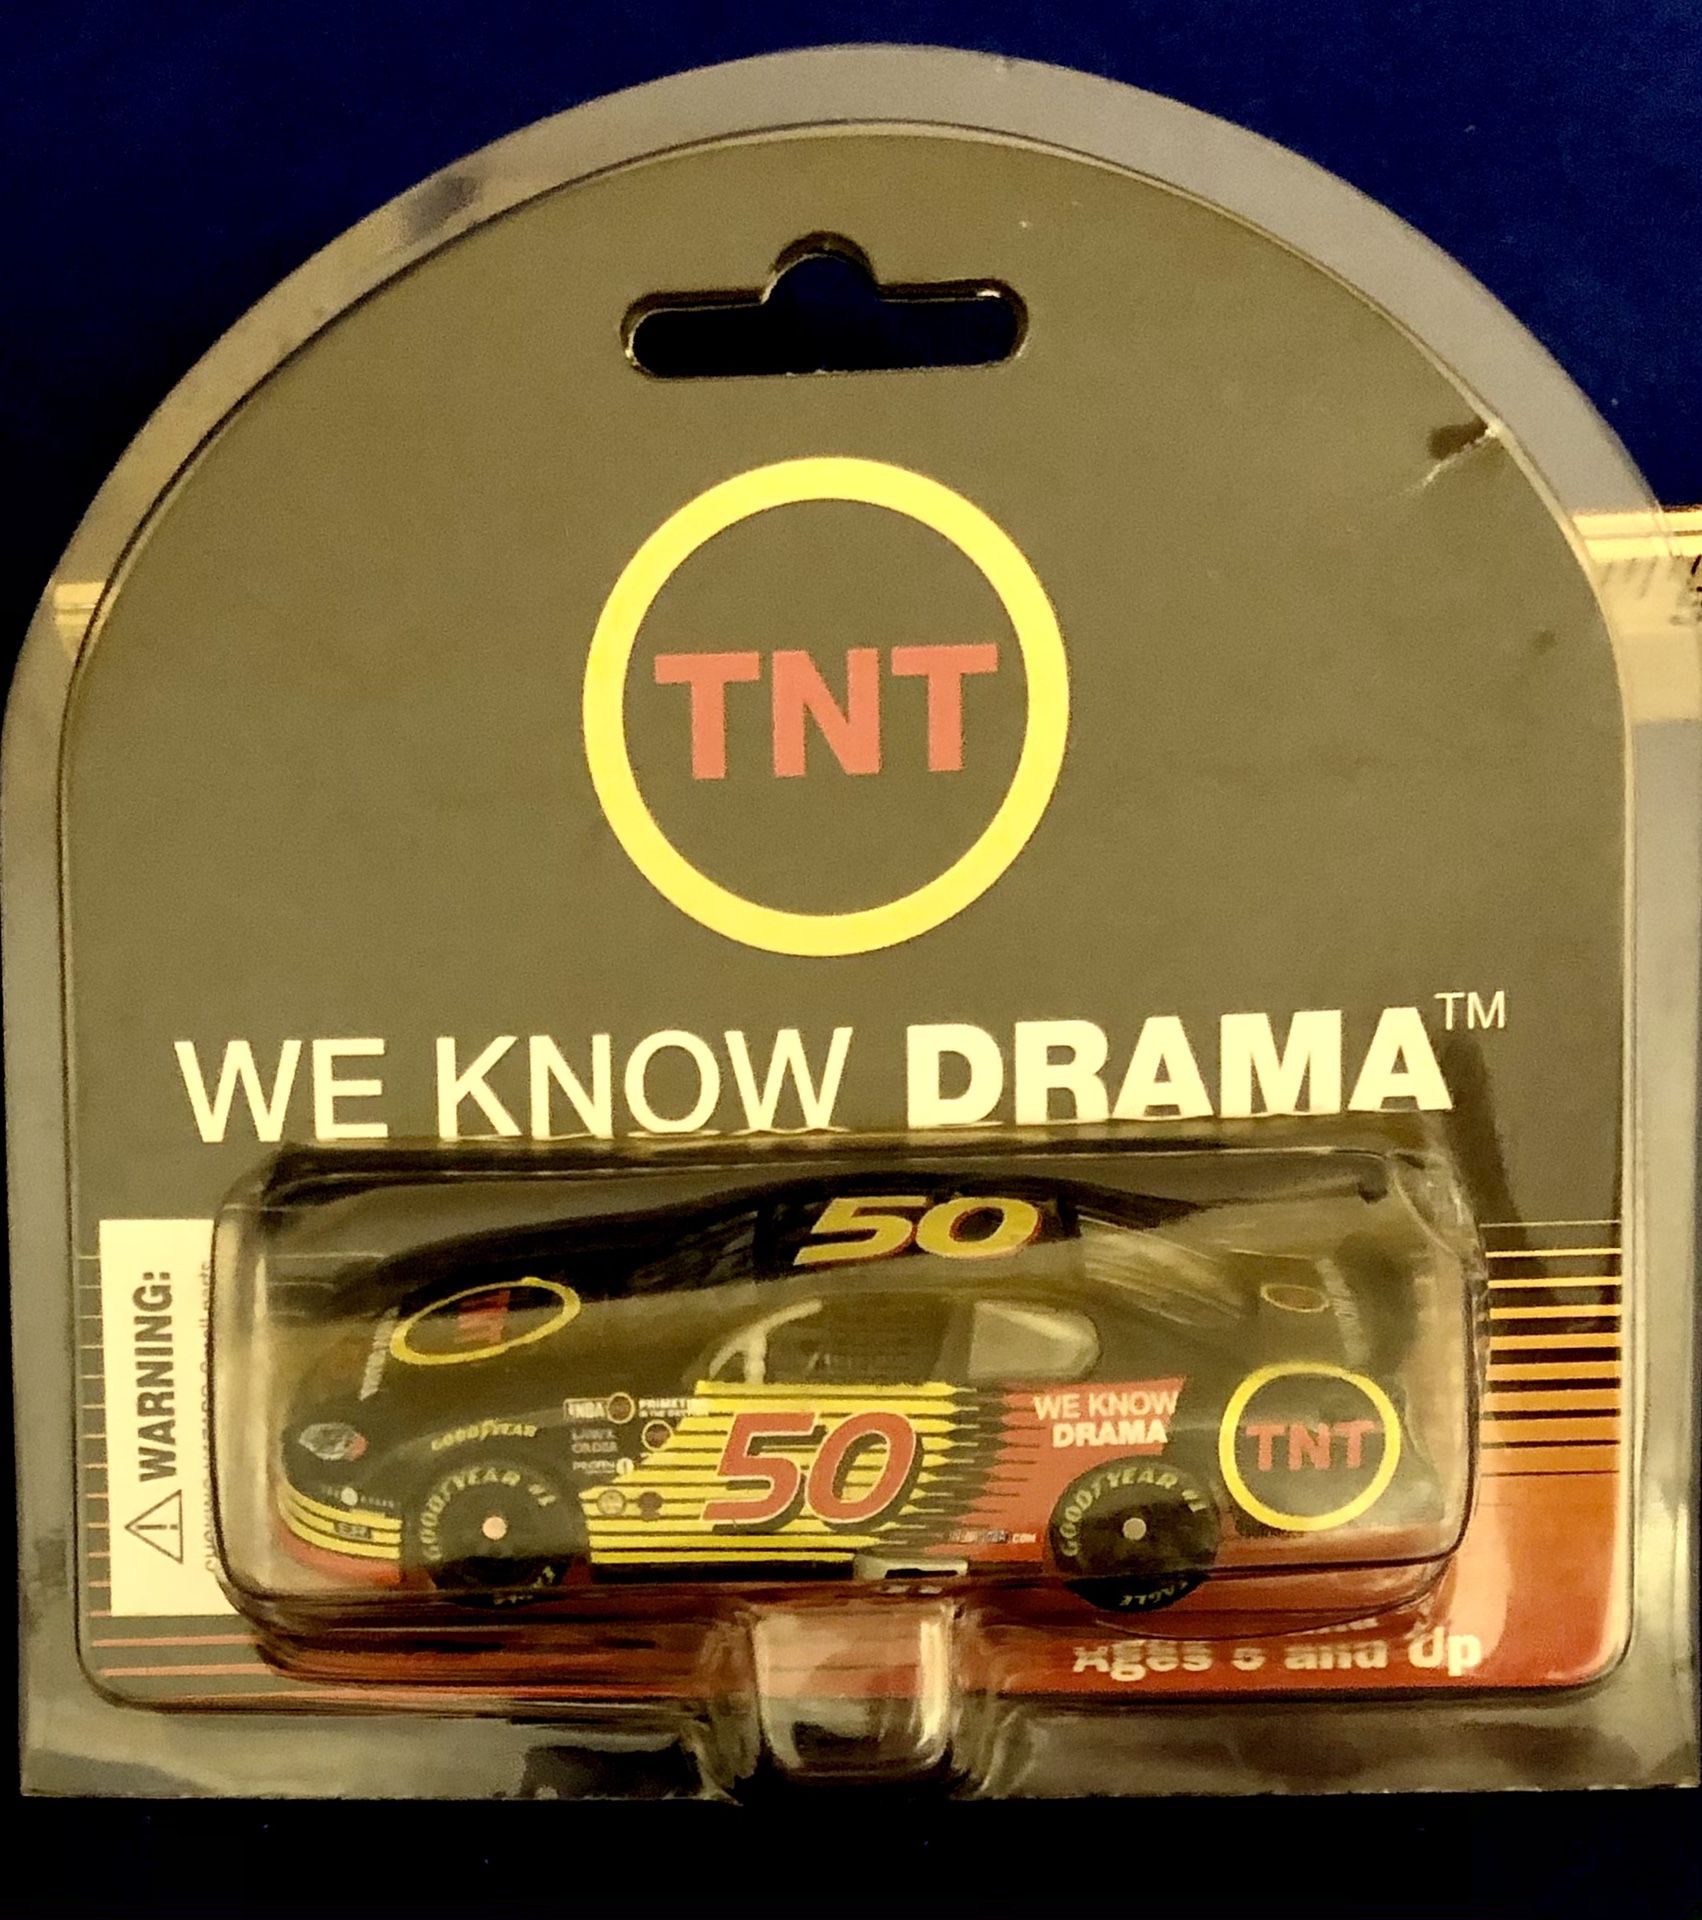 2003 TNT “We Know Drama” #50 Monte Carlo Chevrolet, Team Caliber Promo item.